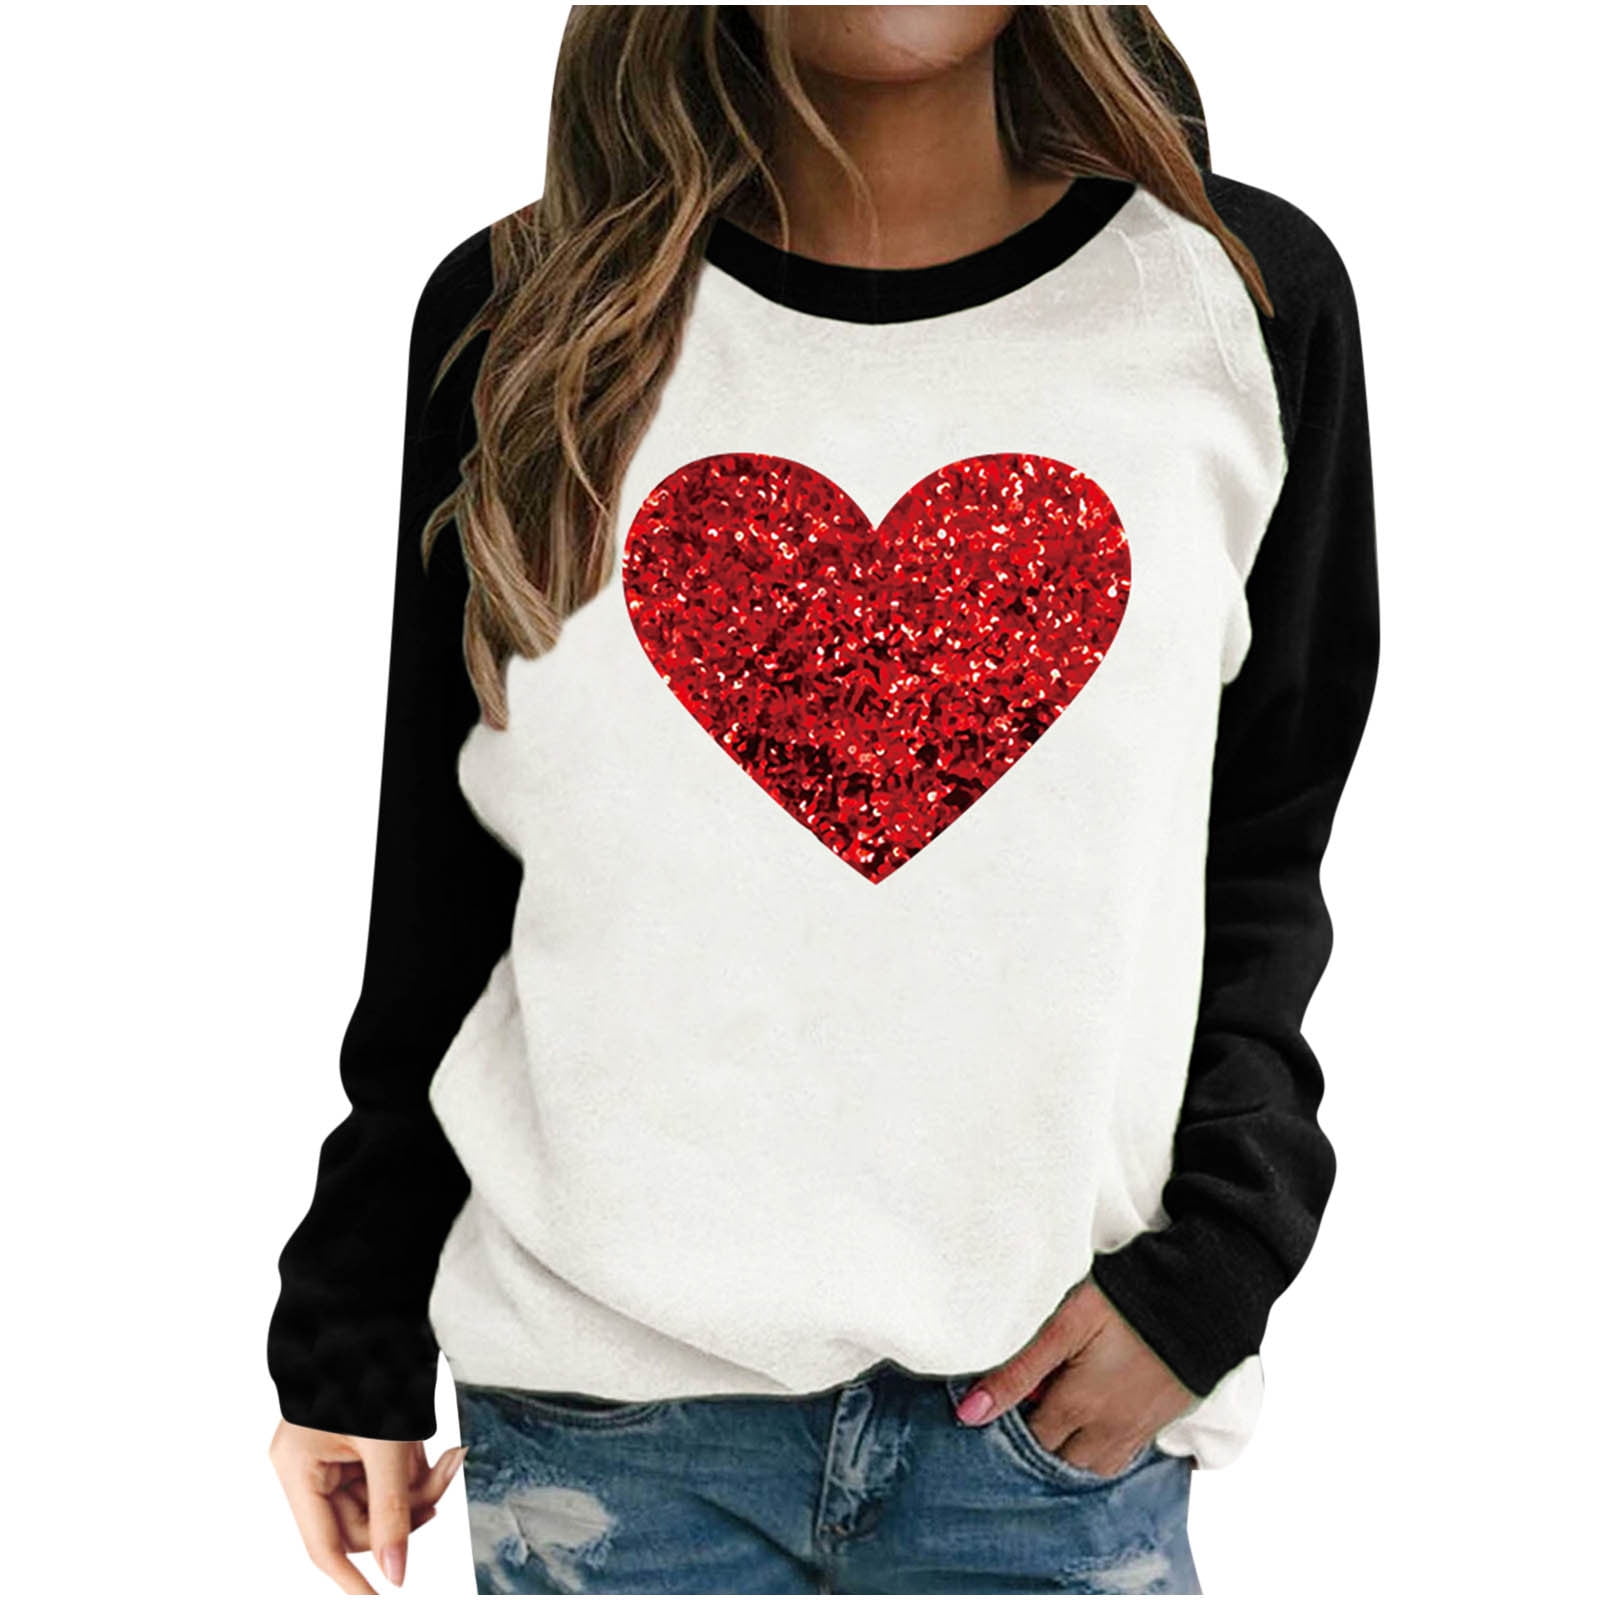 Fatuov Valentine's Day Shirts for Women Clearance Under $5 Love Heart ...